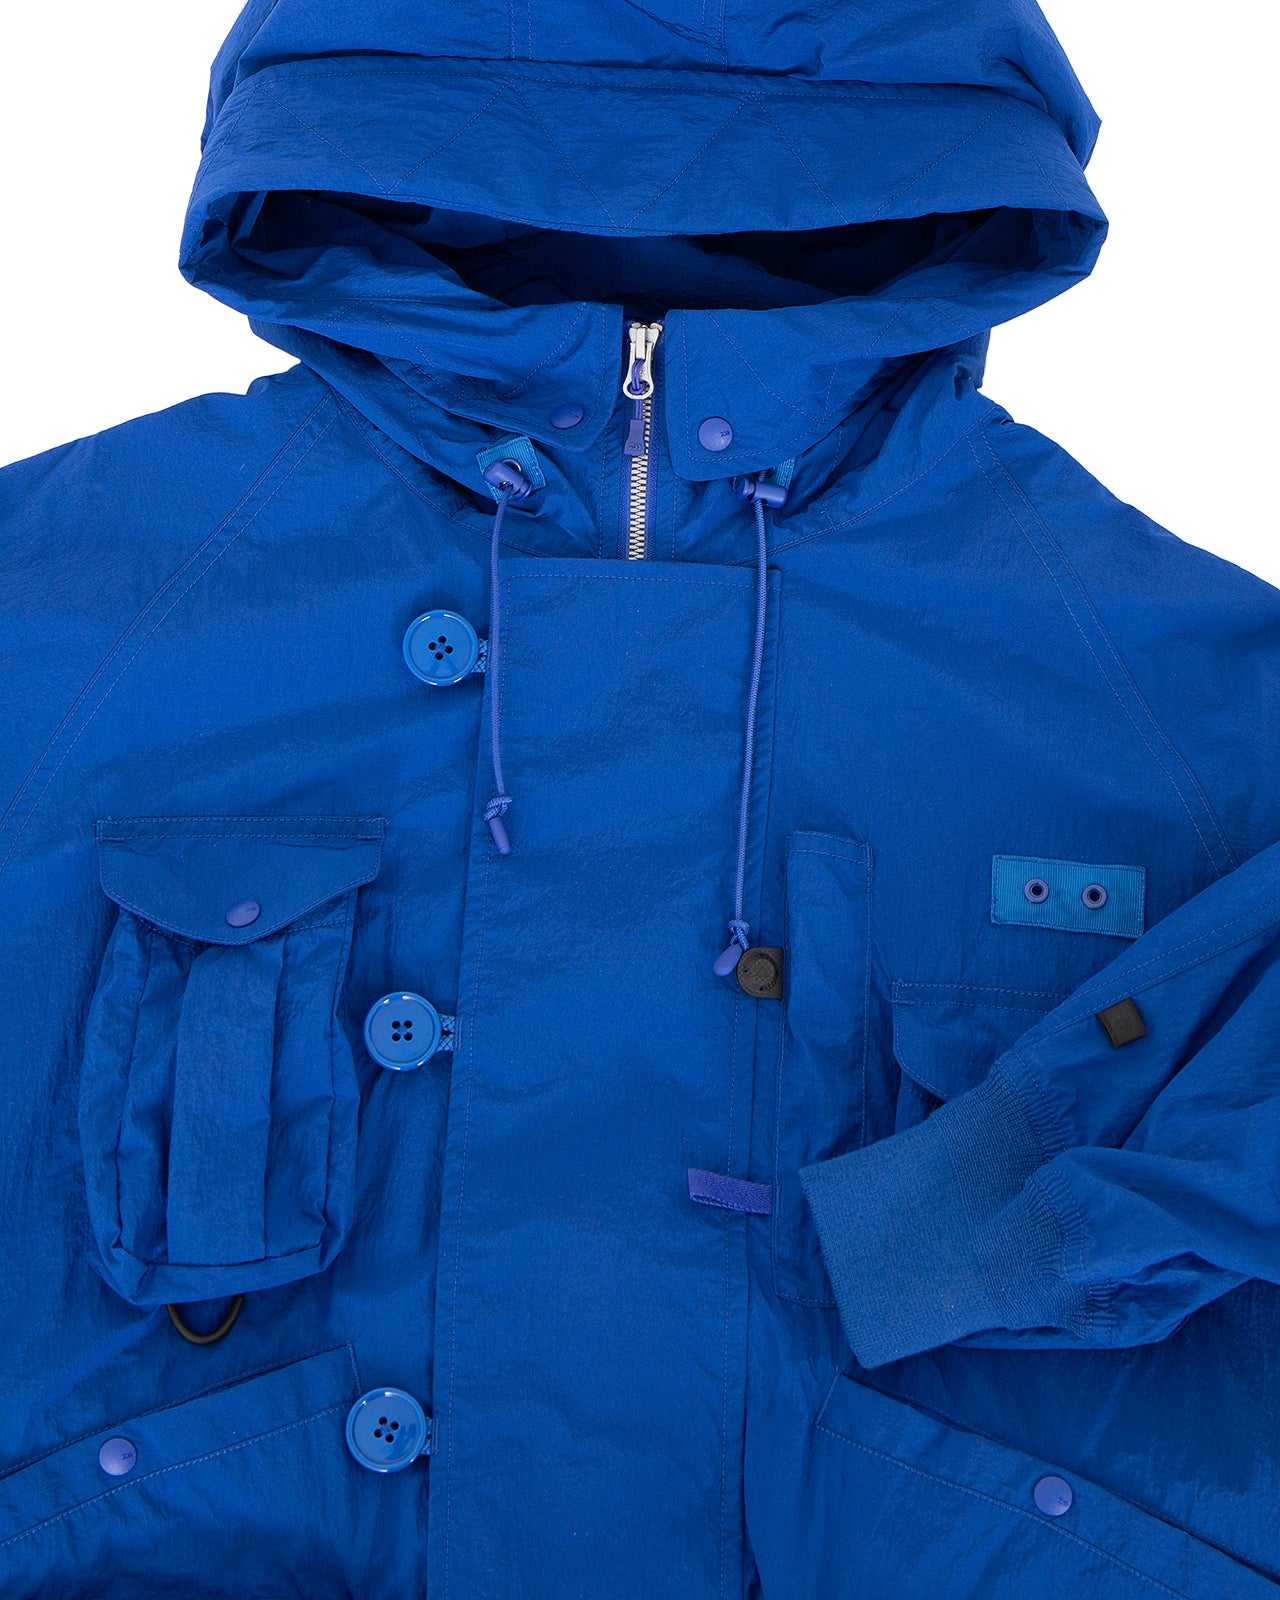 Daiwa NEW Softshell Fishing Jacket - BLUE / BLACK - All Sizes - NEW FOR 2018